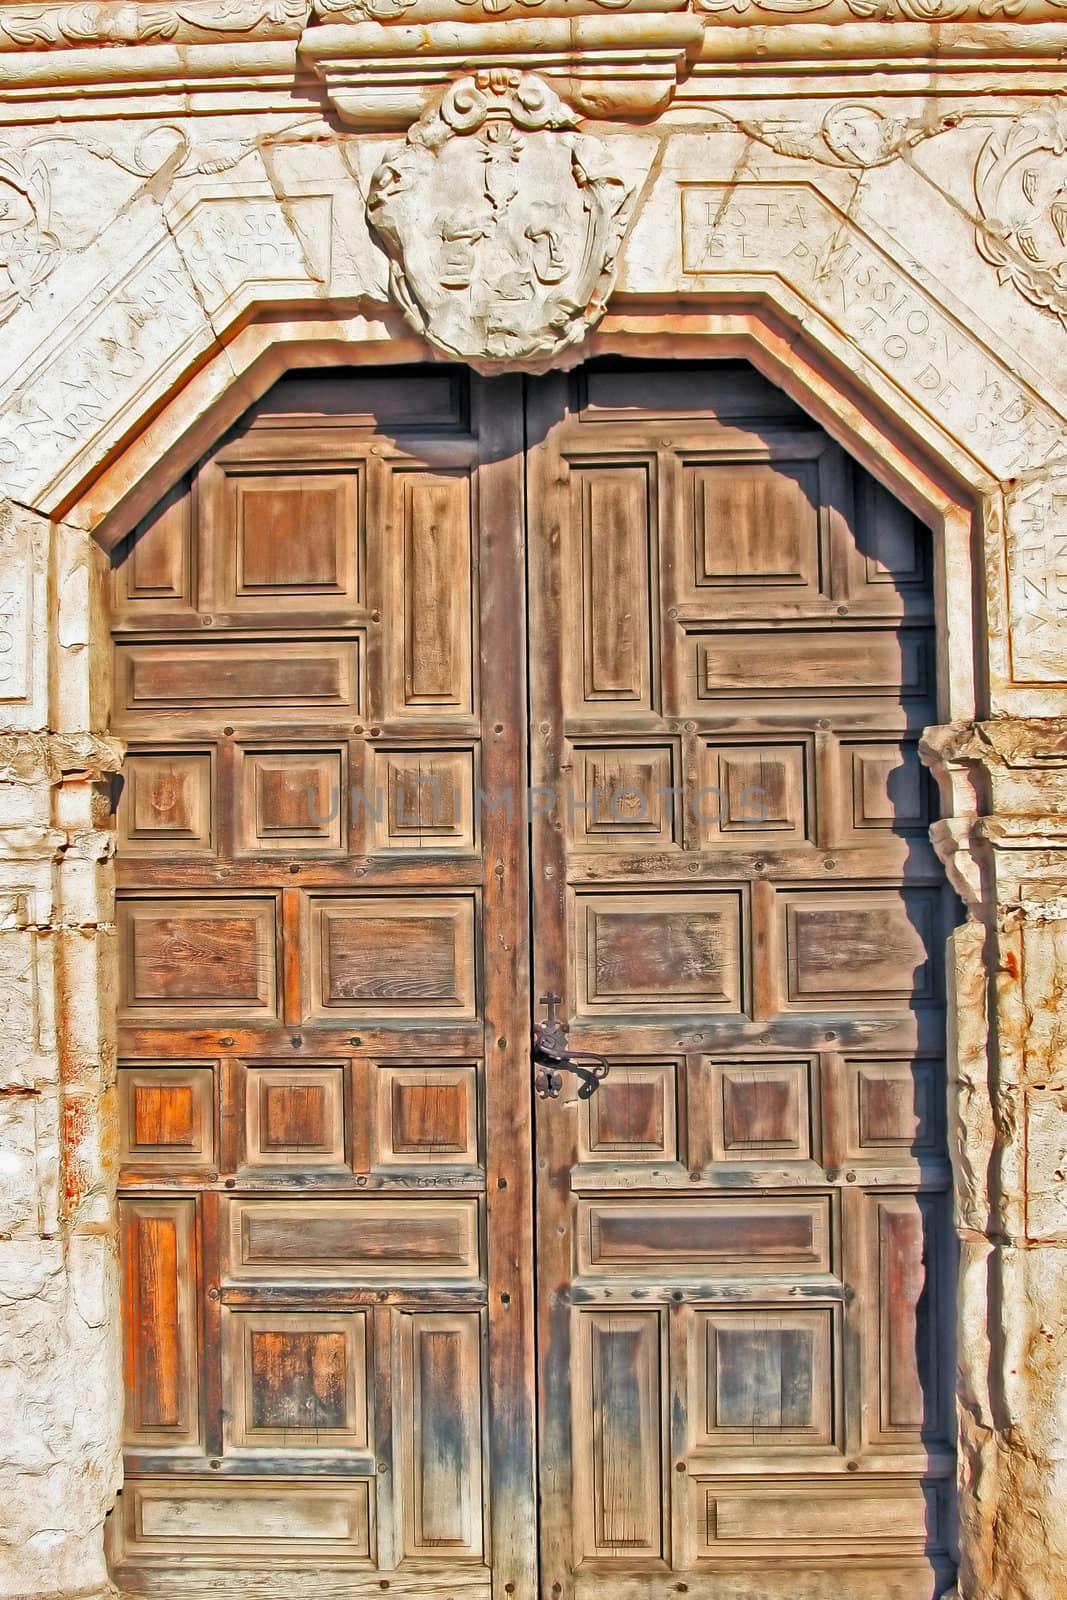 An old worn wooden door showing the grain of the wood